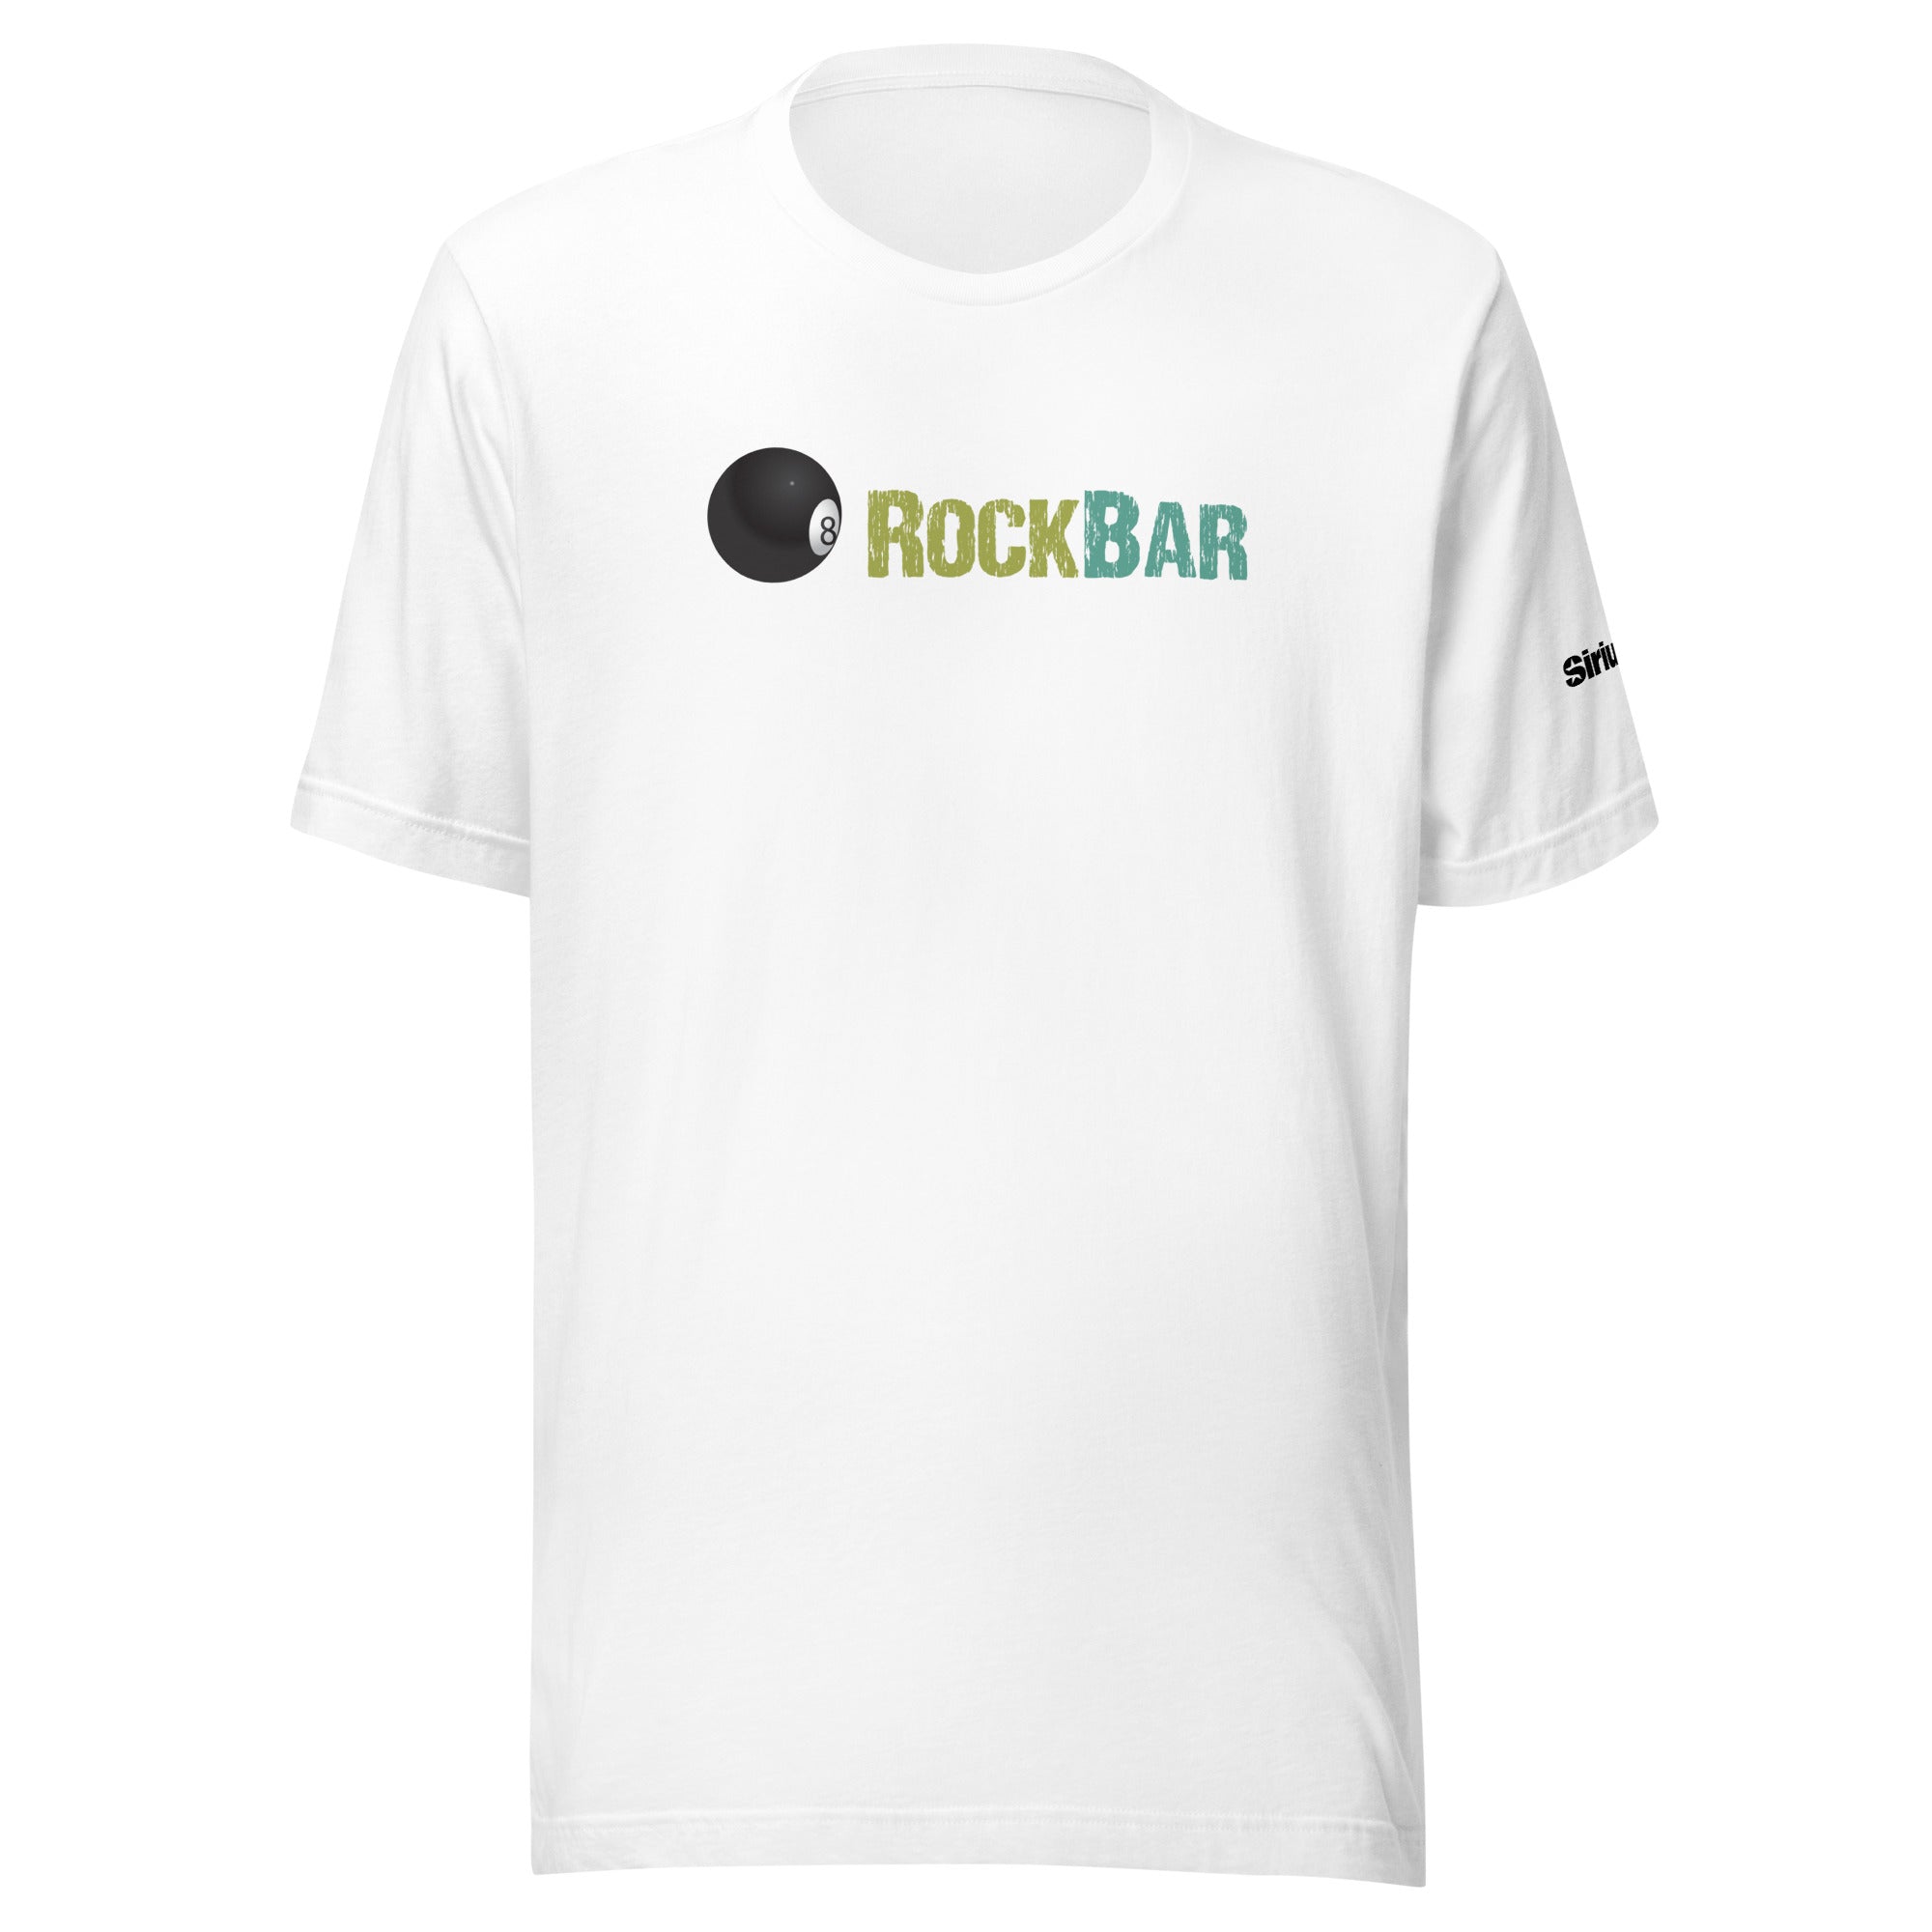 RockBar: T-shirt (White)